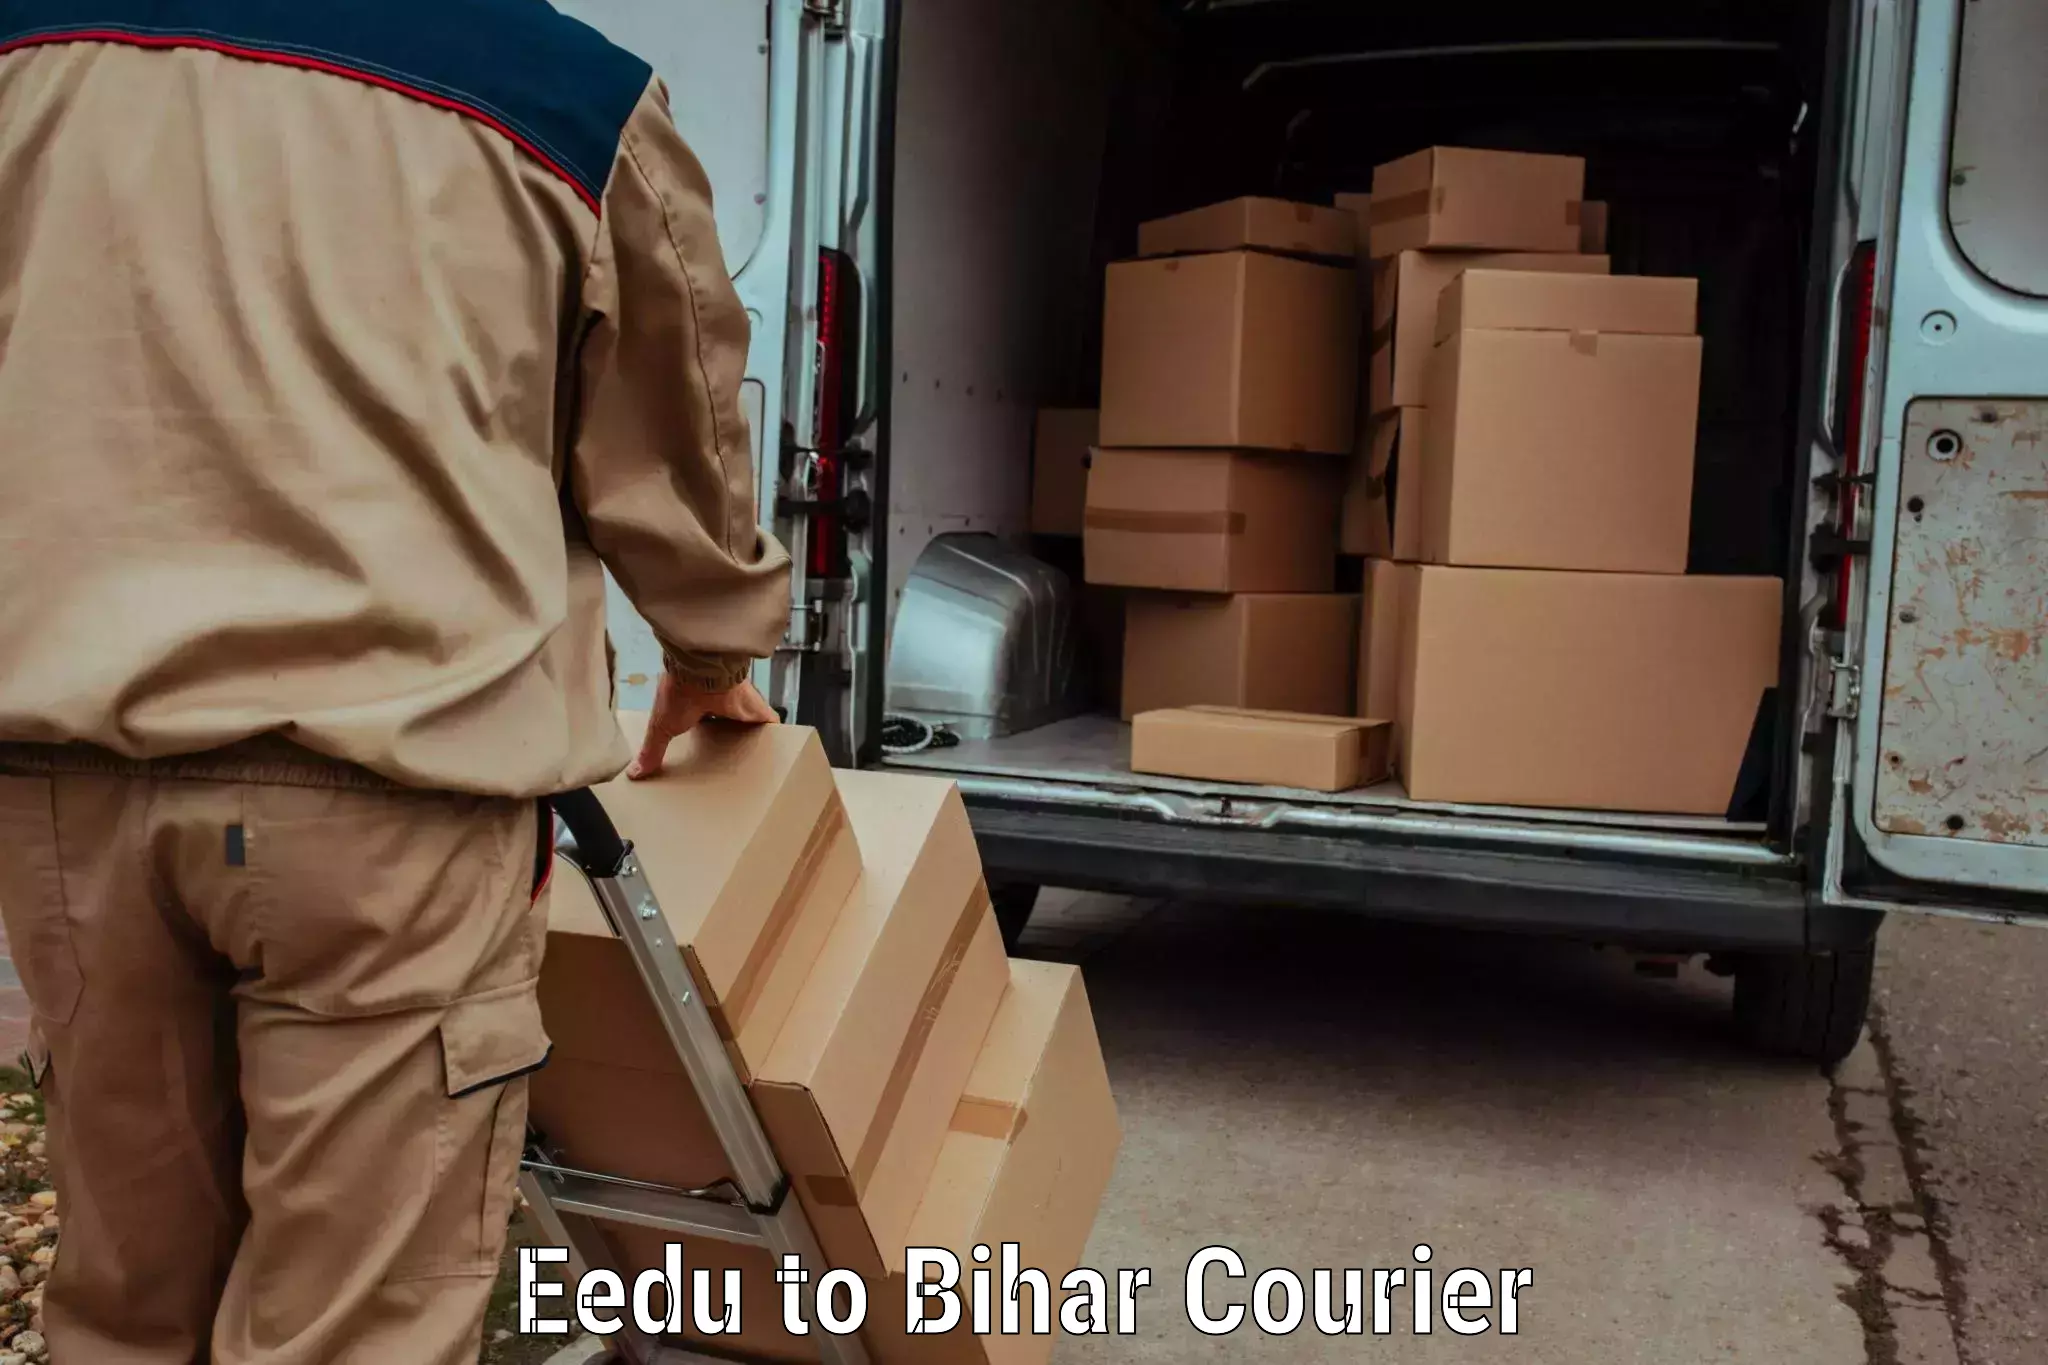 Courier service comparison Eedu to Chakai